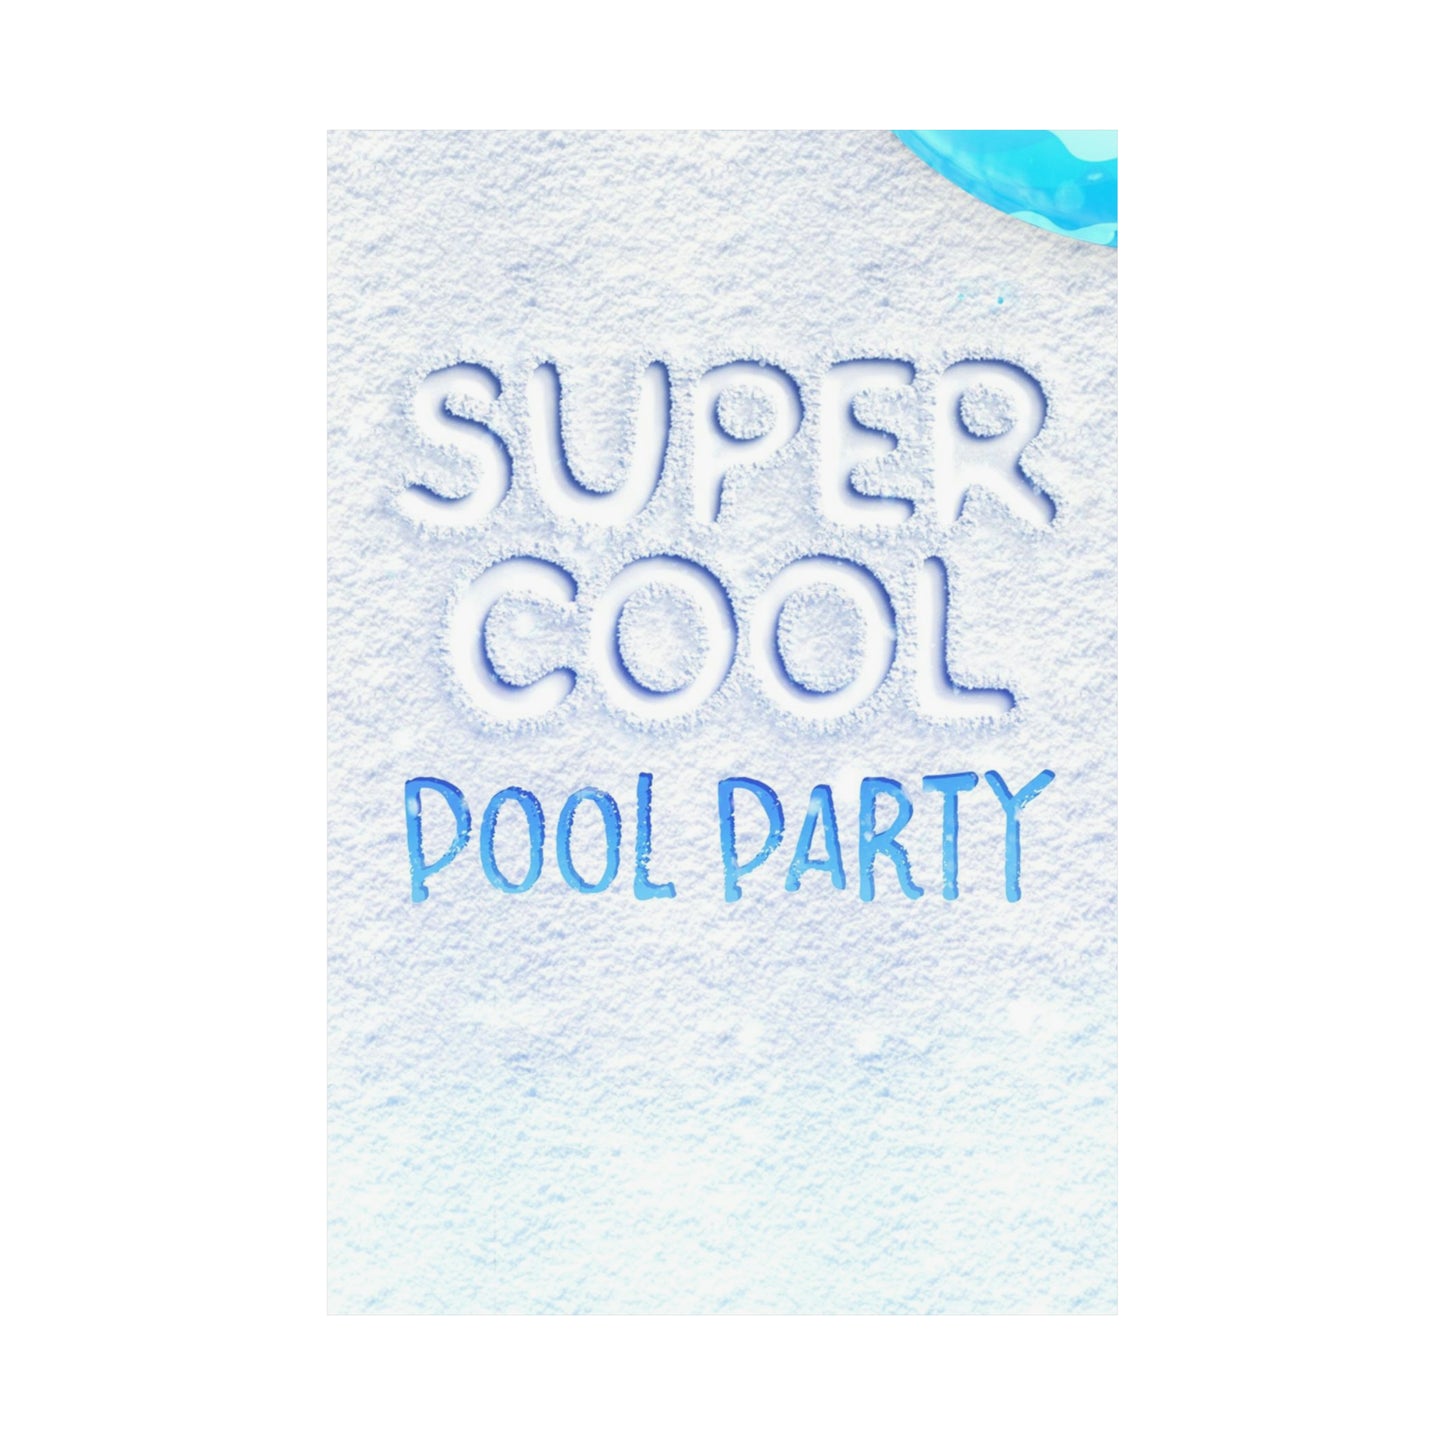 Poster I V7 I Super Cool Pool Party Event Graphic I Vertical